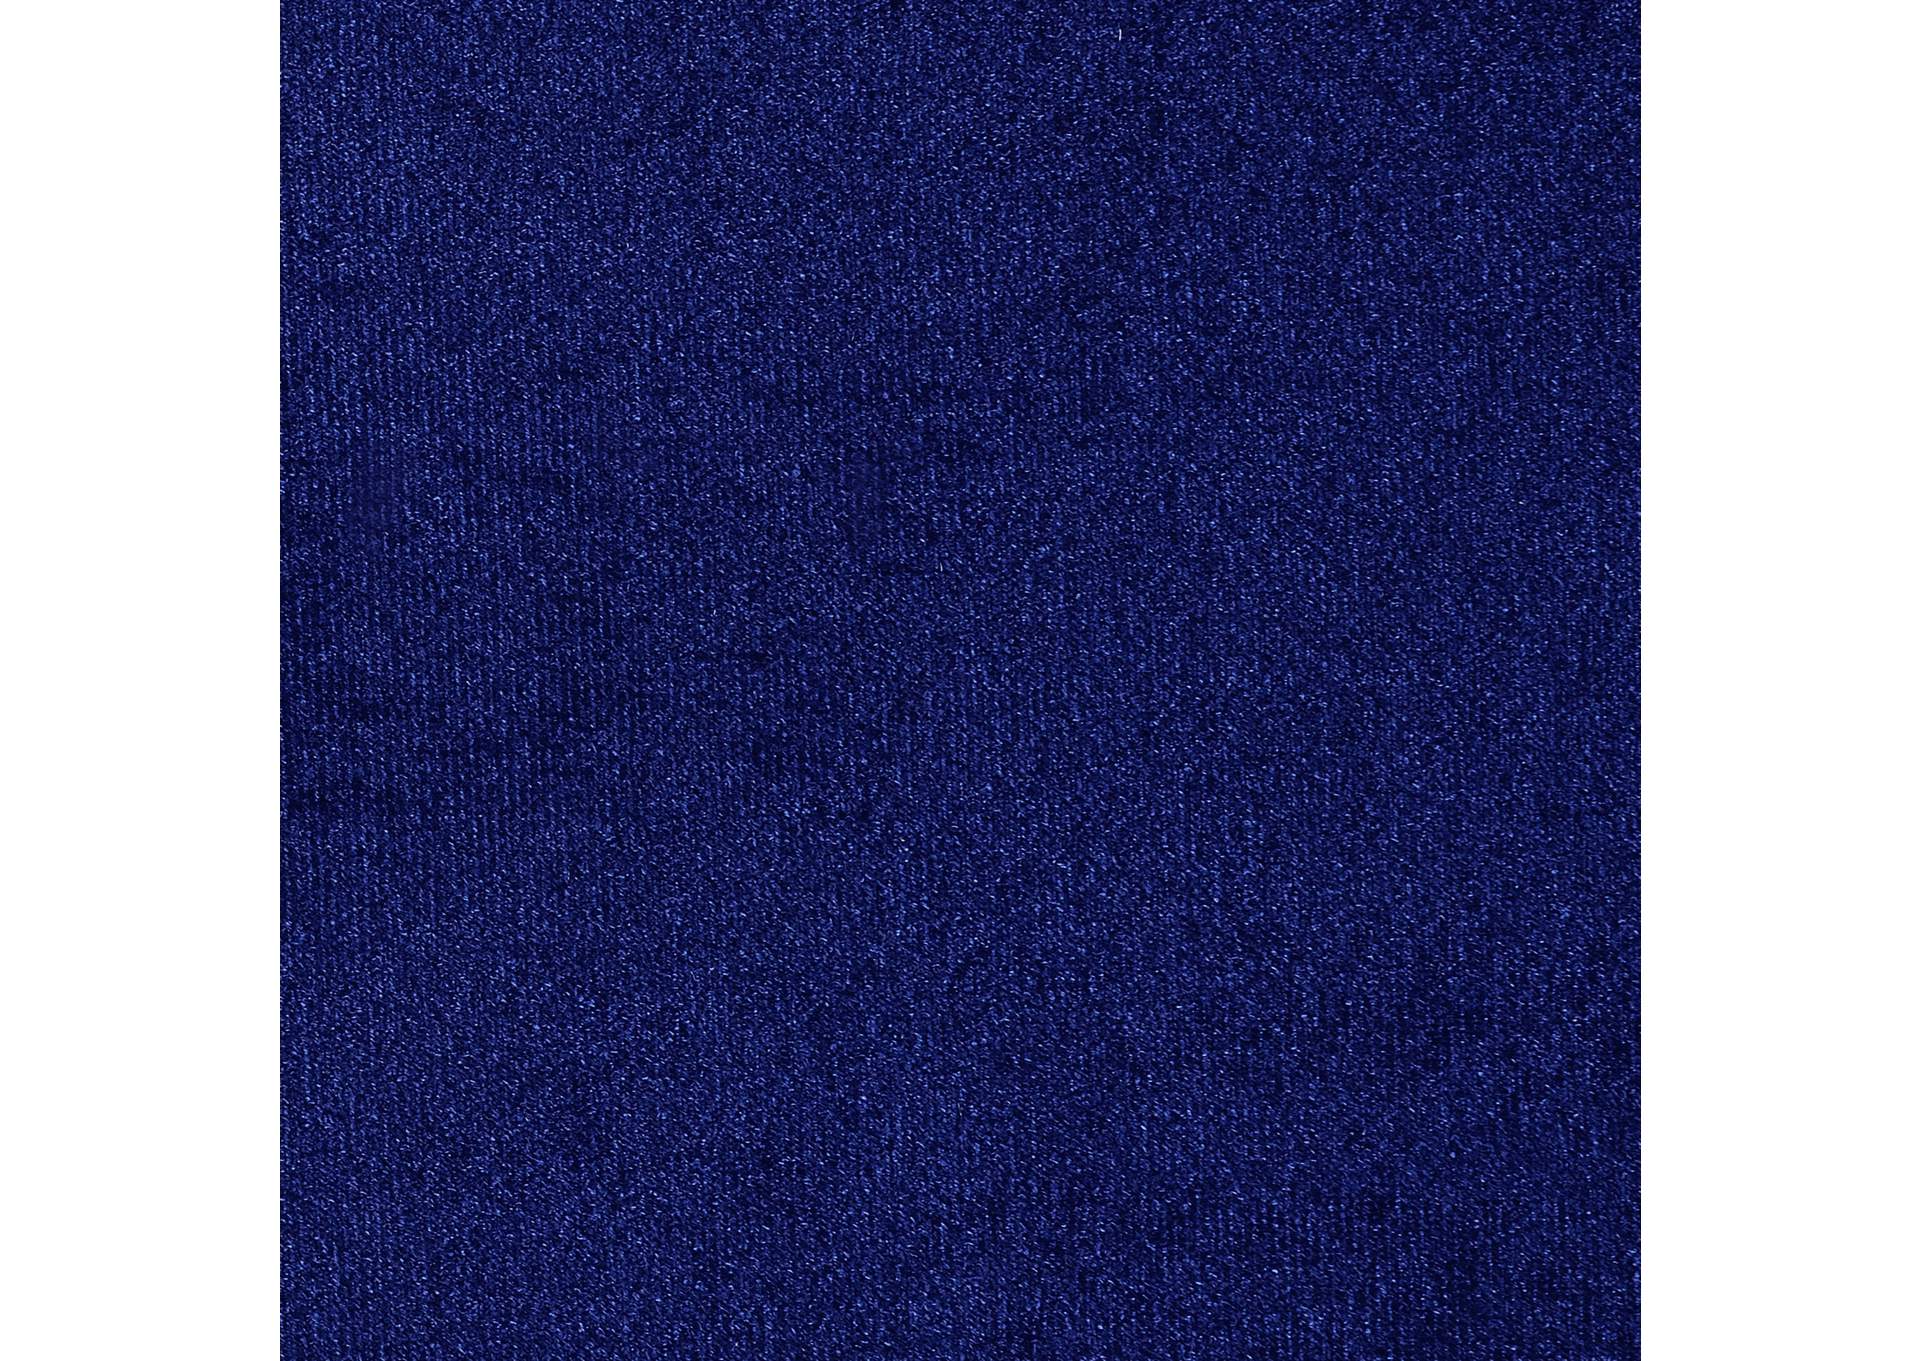 Bleker 3-piece Tuxedo Arm Living Room Set Blue,Coaster Furniture